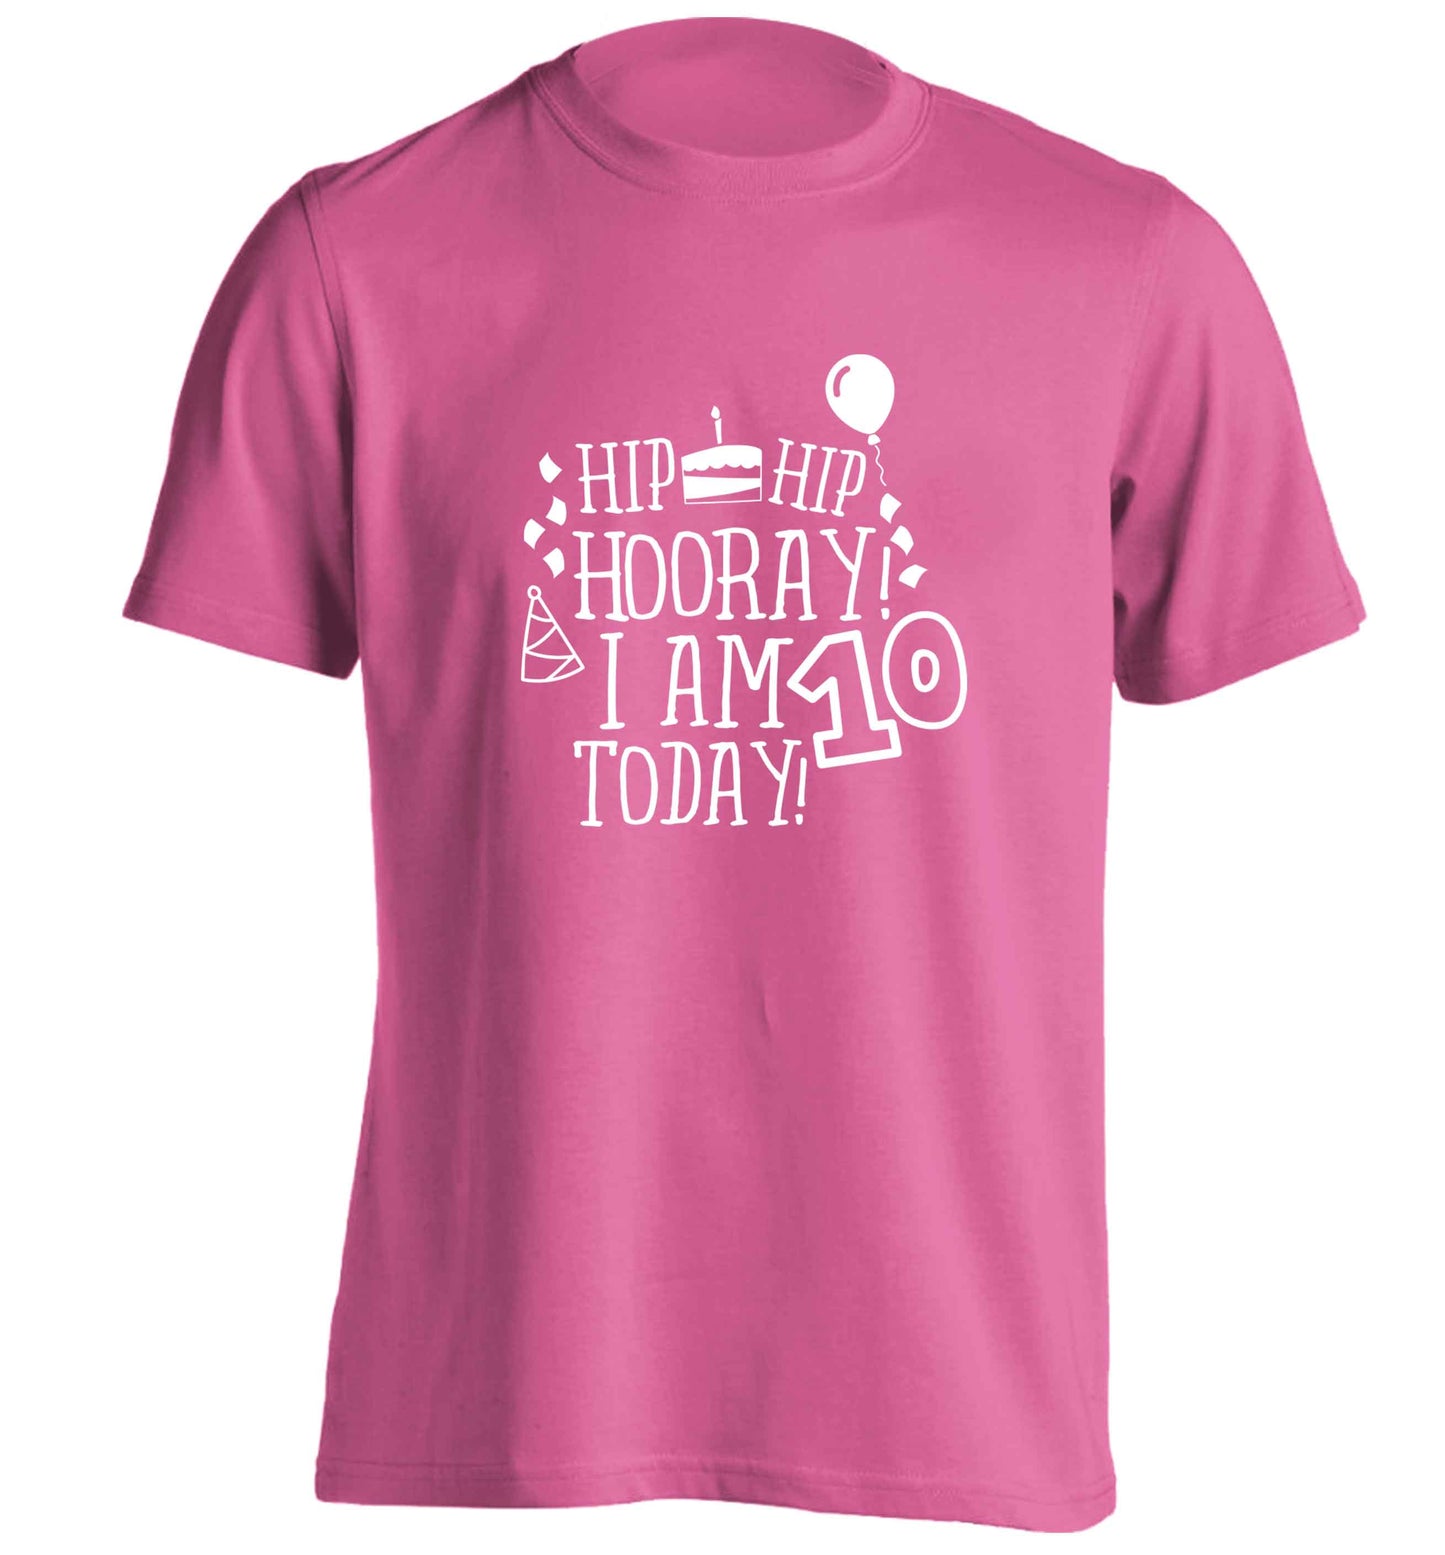 Hip hip hooray I am ten today! adults unisex pink Tshirt 2XL